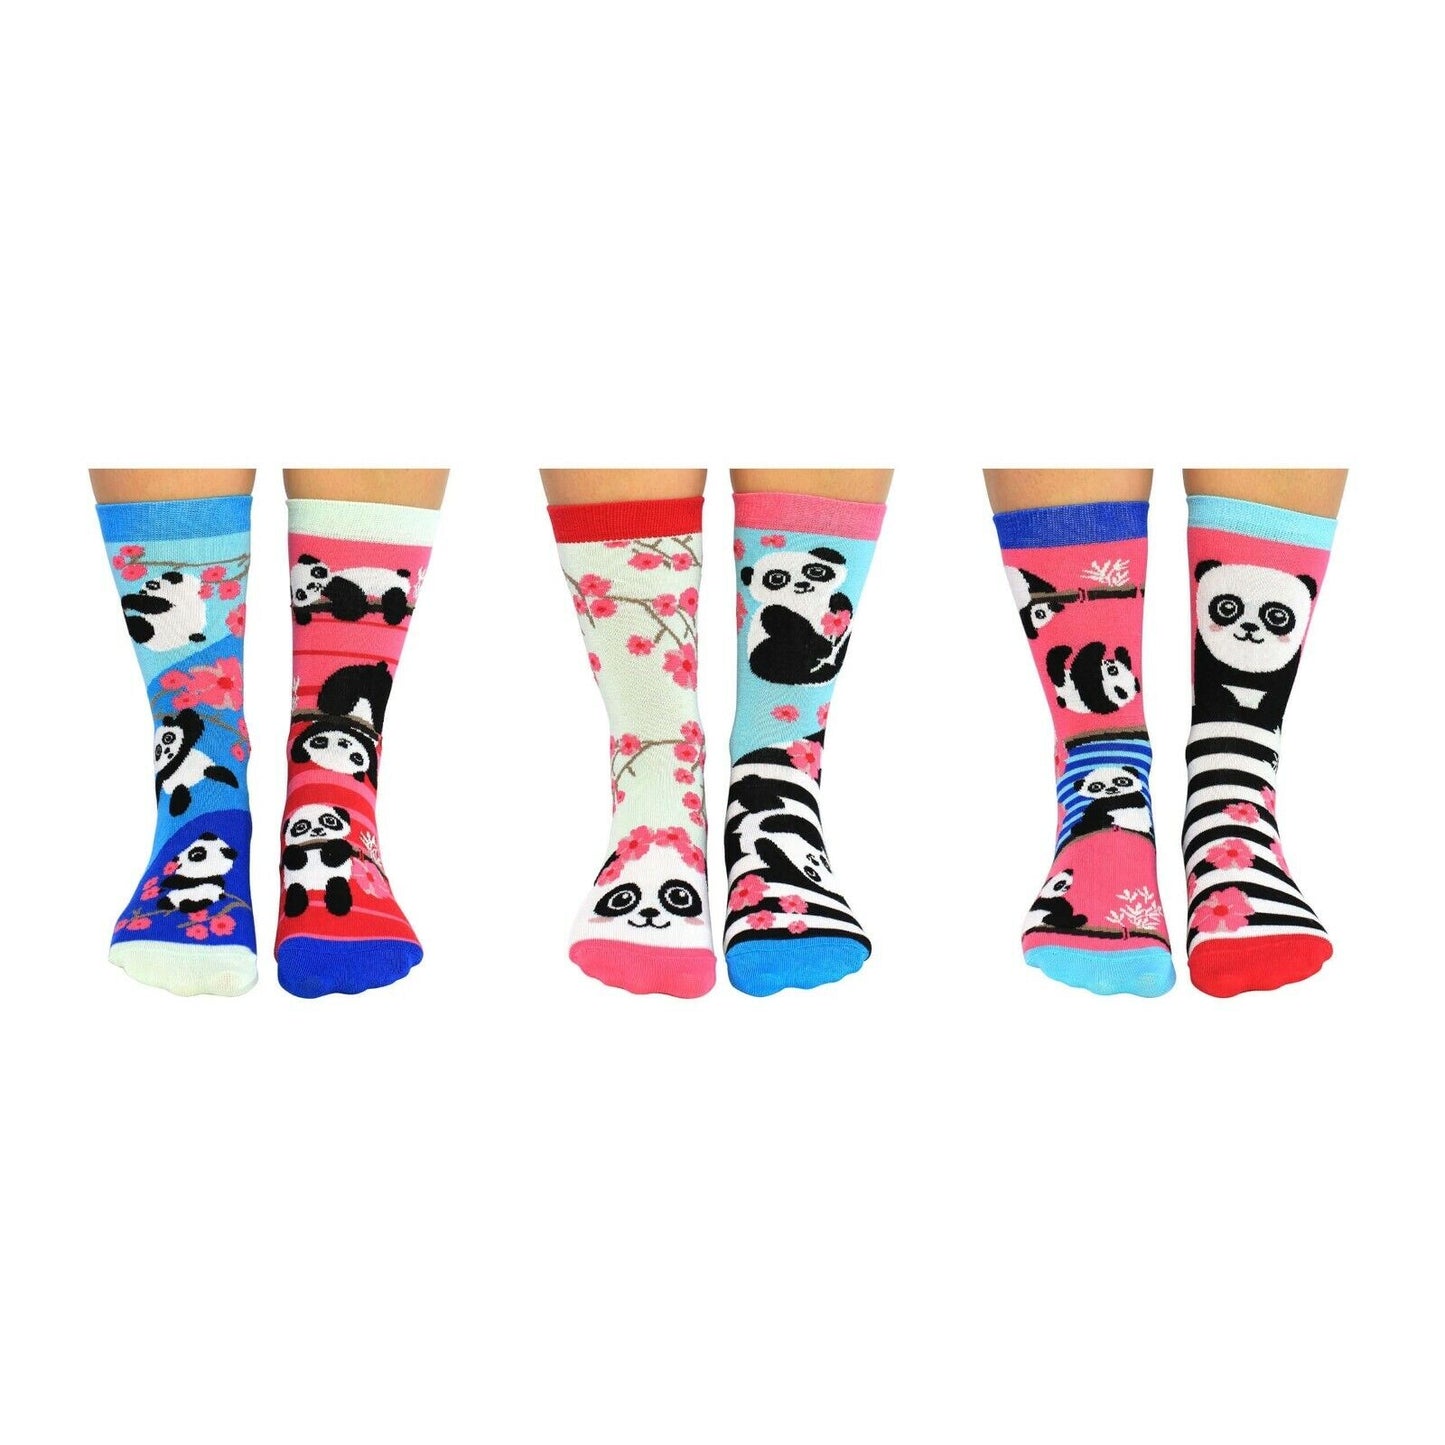 Bamboozle 6 Odd Socks Gift Box-Ladies Size 4-8